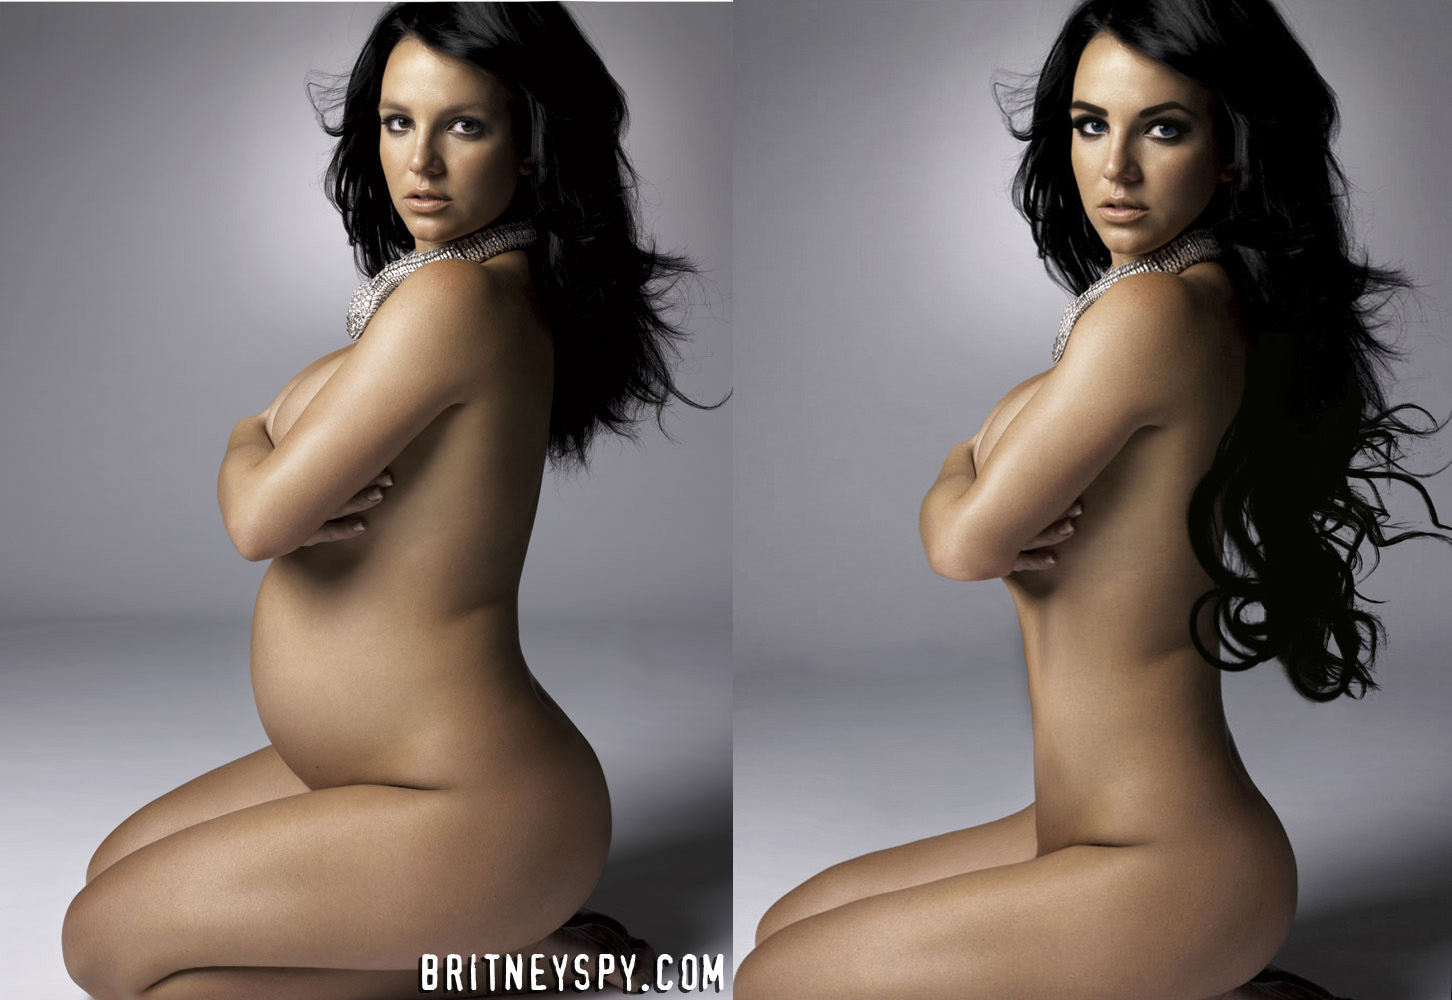 Photoshopped Celebrities Nude.